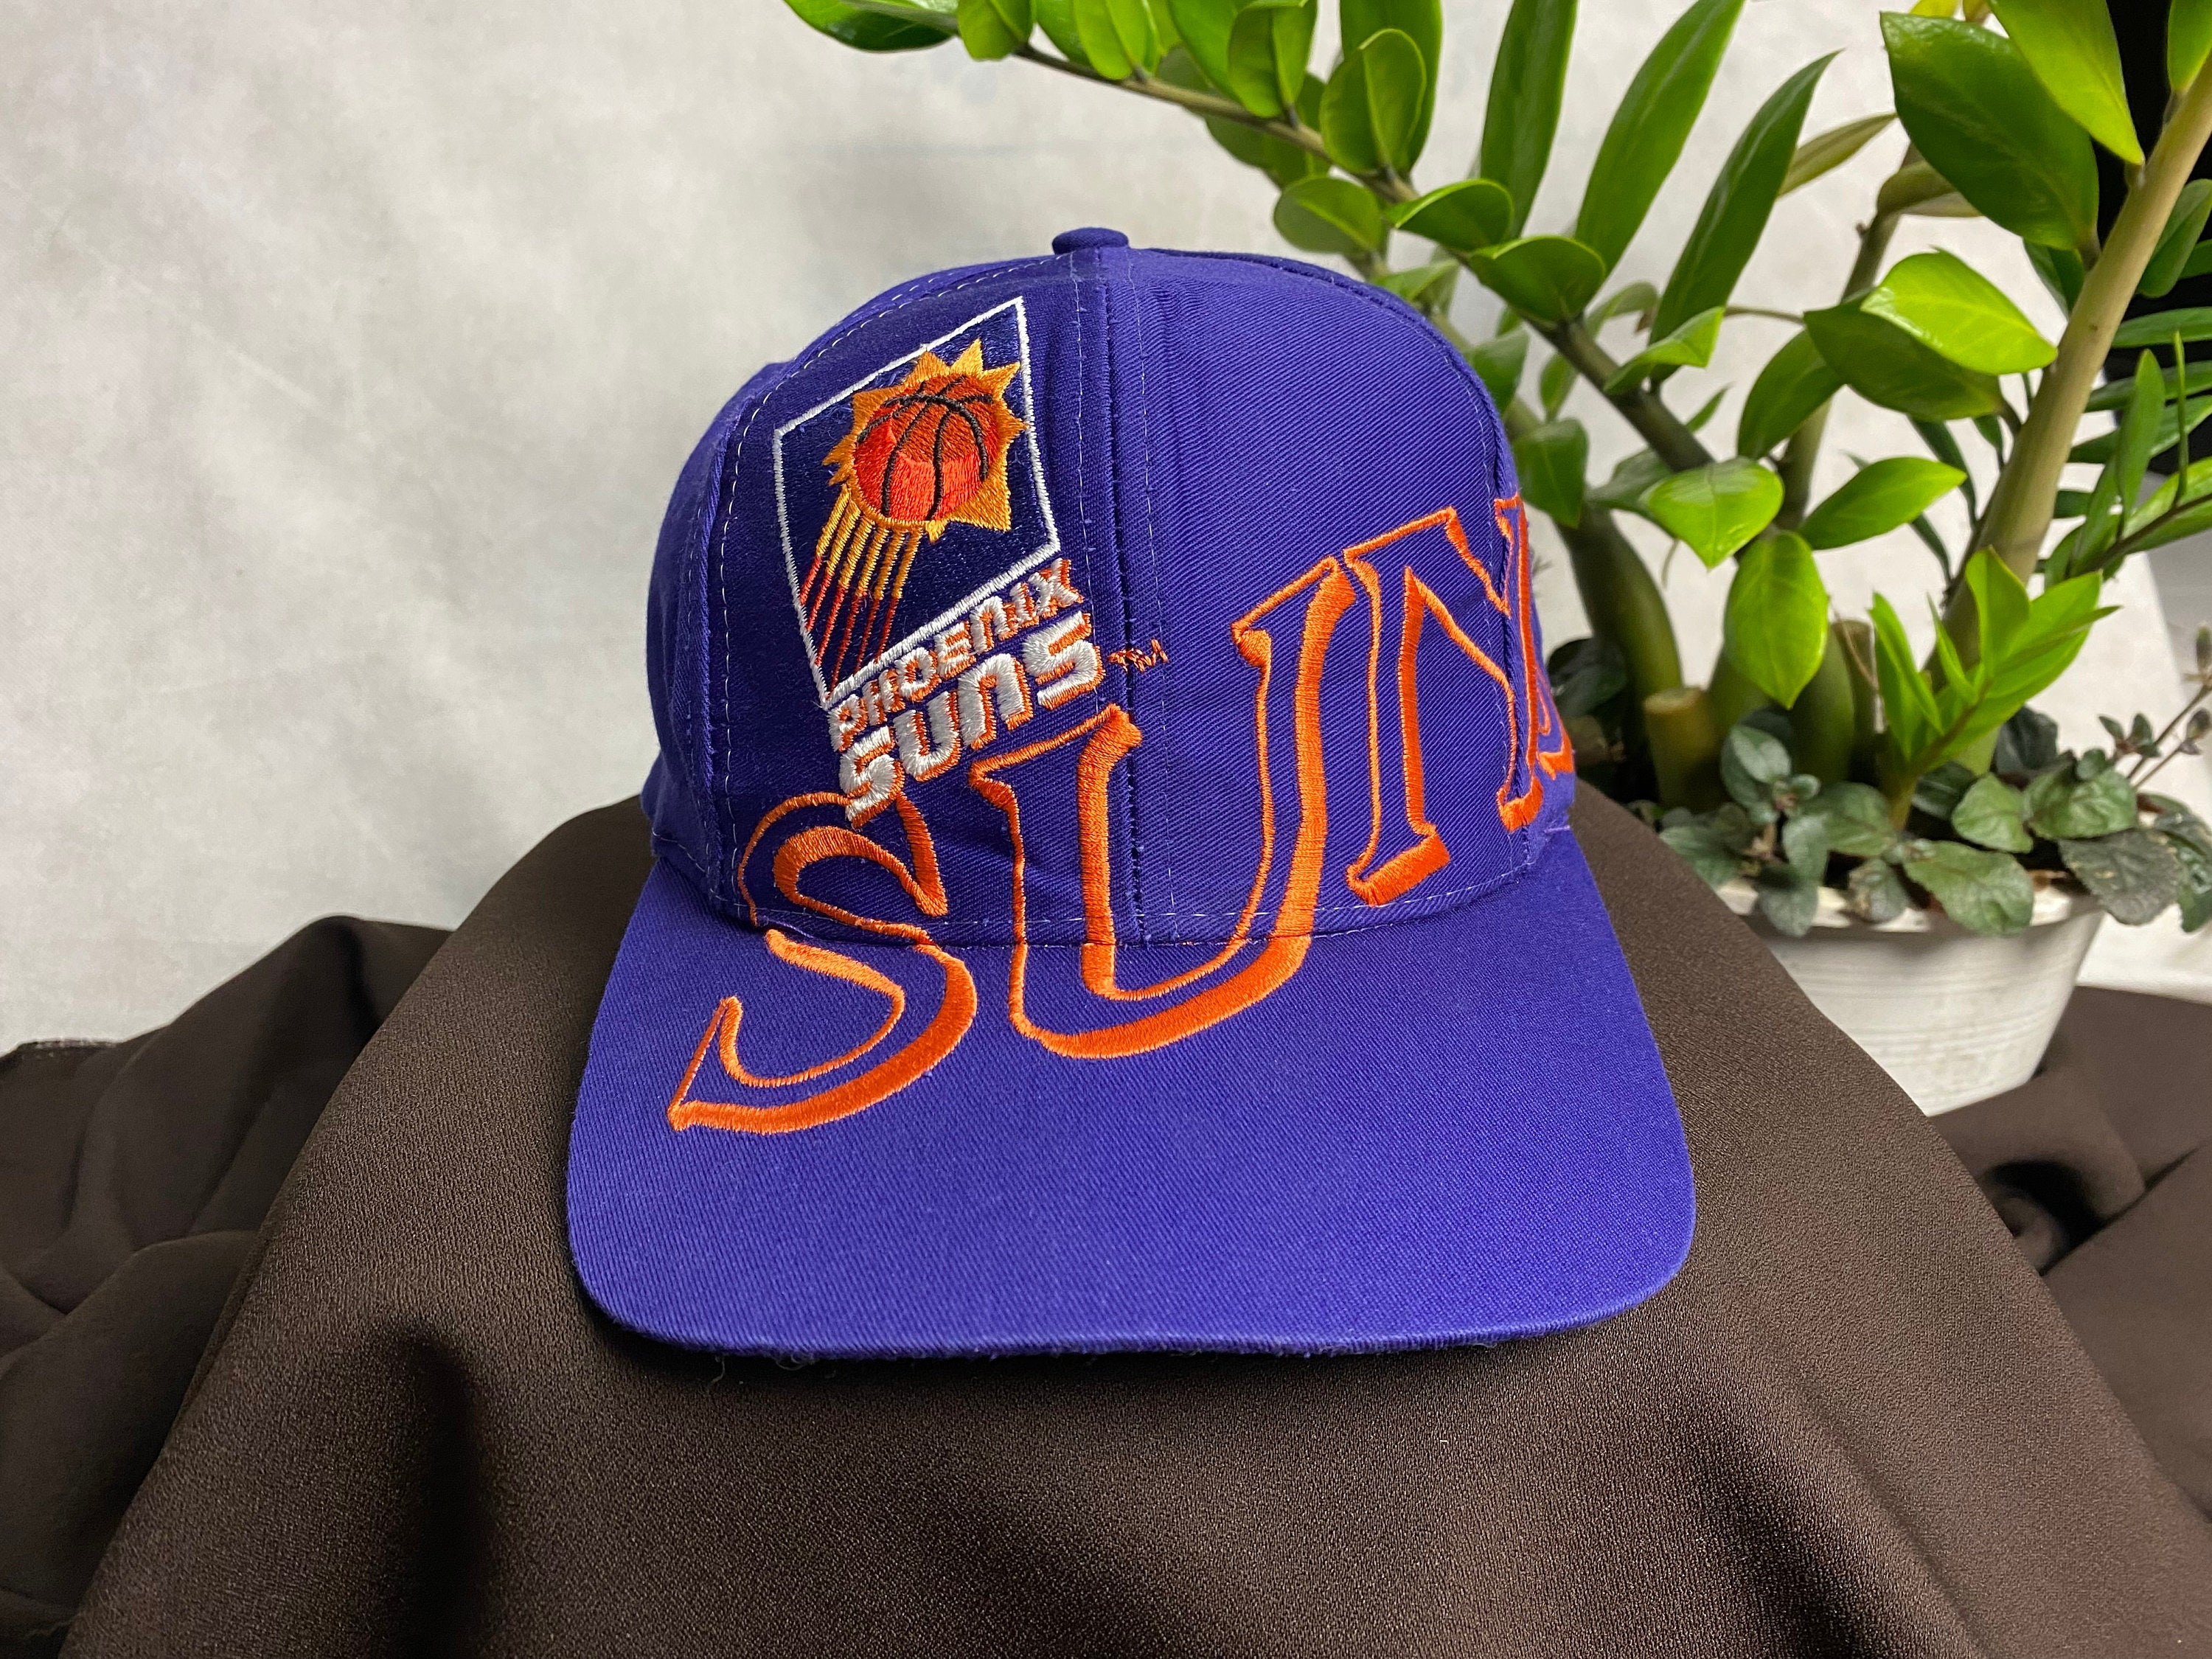 Mitchell & Ness Suns Double Shark Snapback Hat - White / Purple / Orange